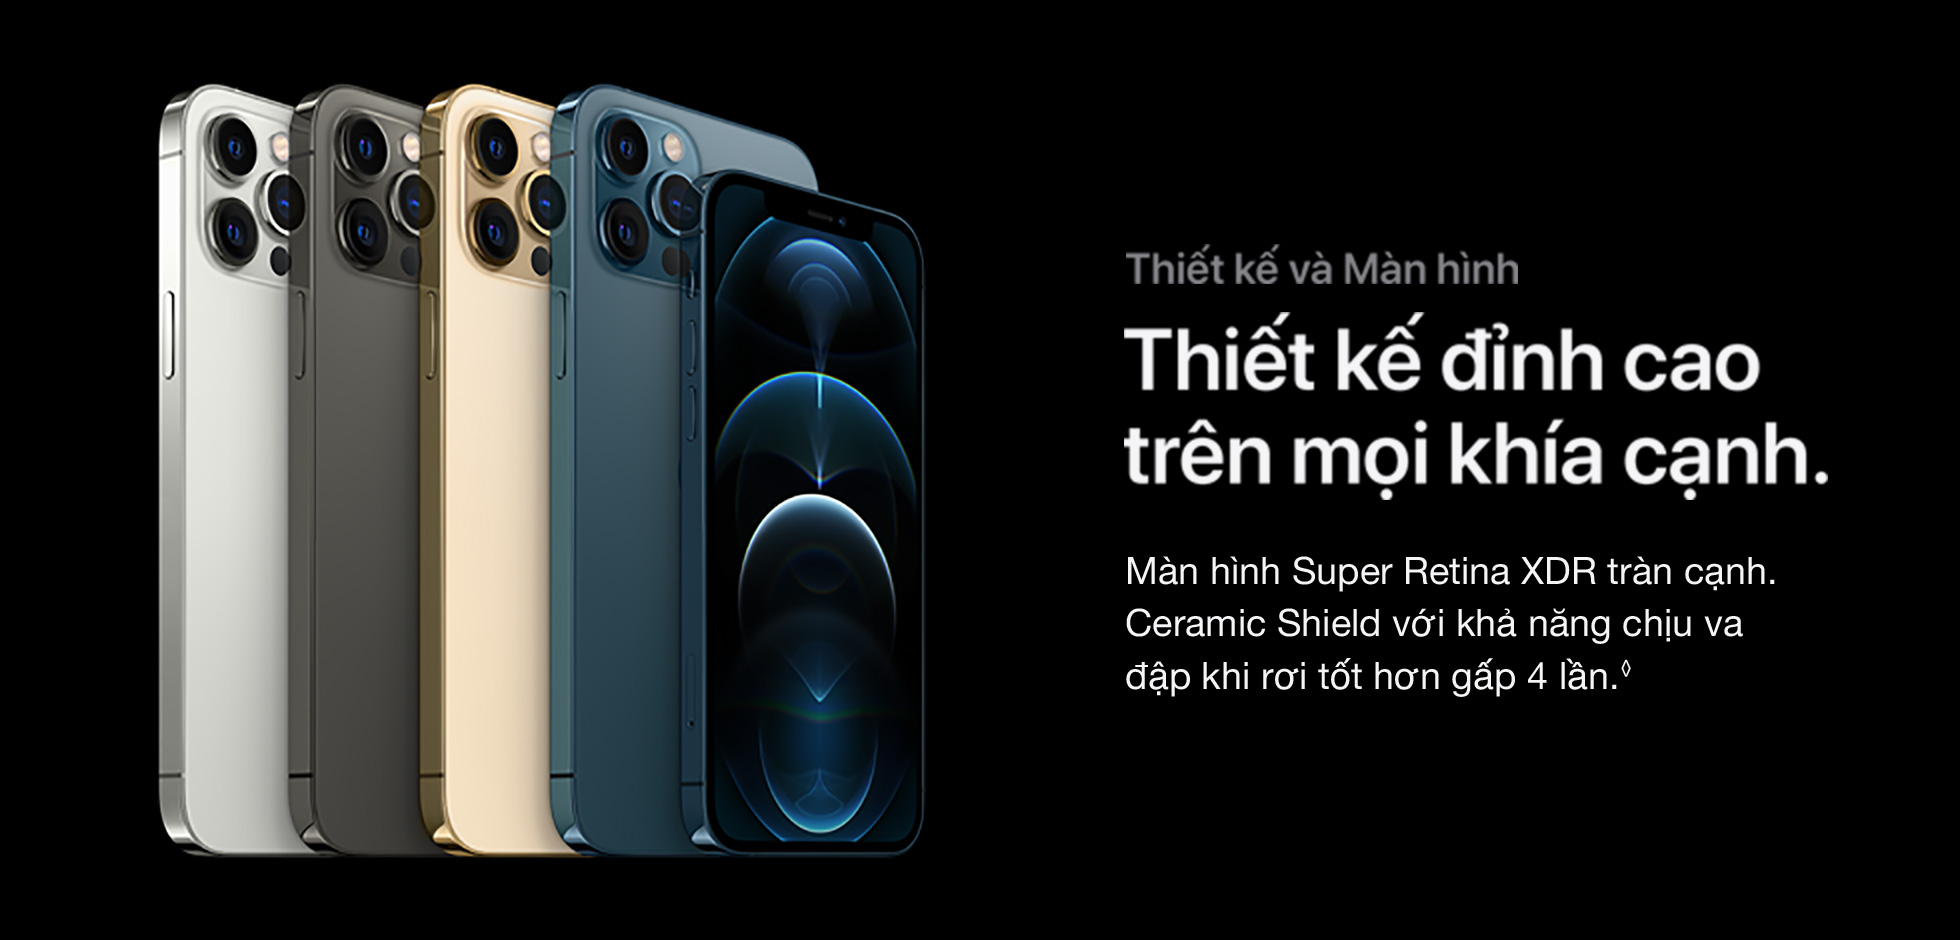 iPhone 12 Pro 128GB - Thiết kế